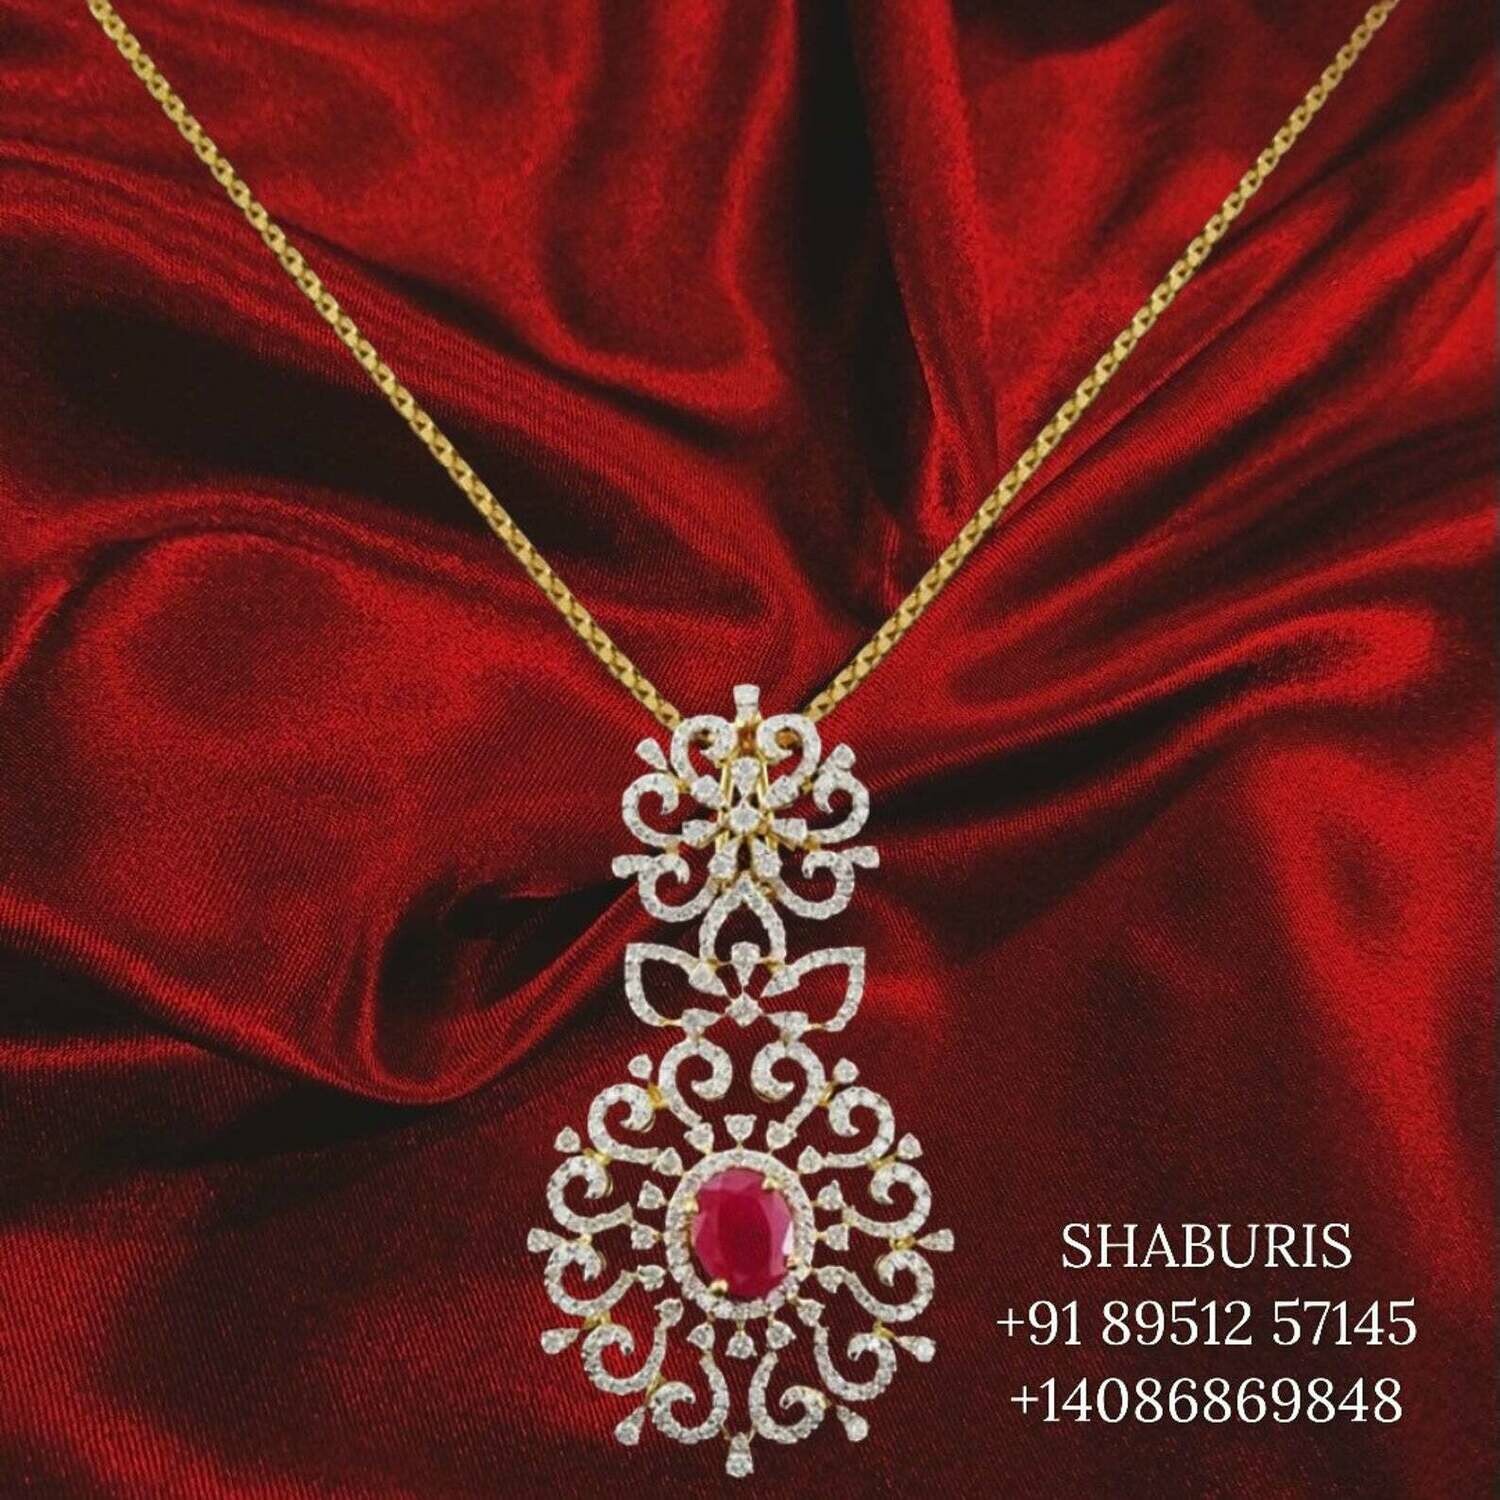 Diamond Jewelry,Pure Silver jewelry Indian ,pendant Jewelry,diamond pendant,Indian Bridal,Indian Wedding Jewelry-NIHIRA-SHABURIS